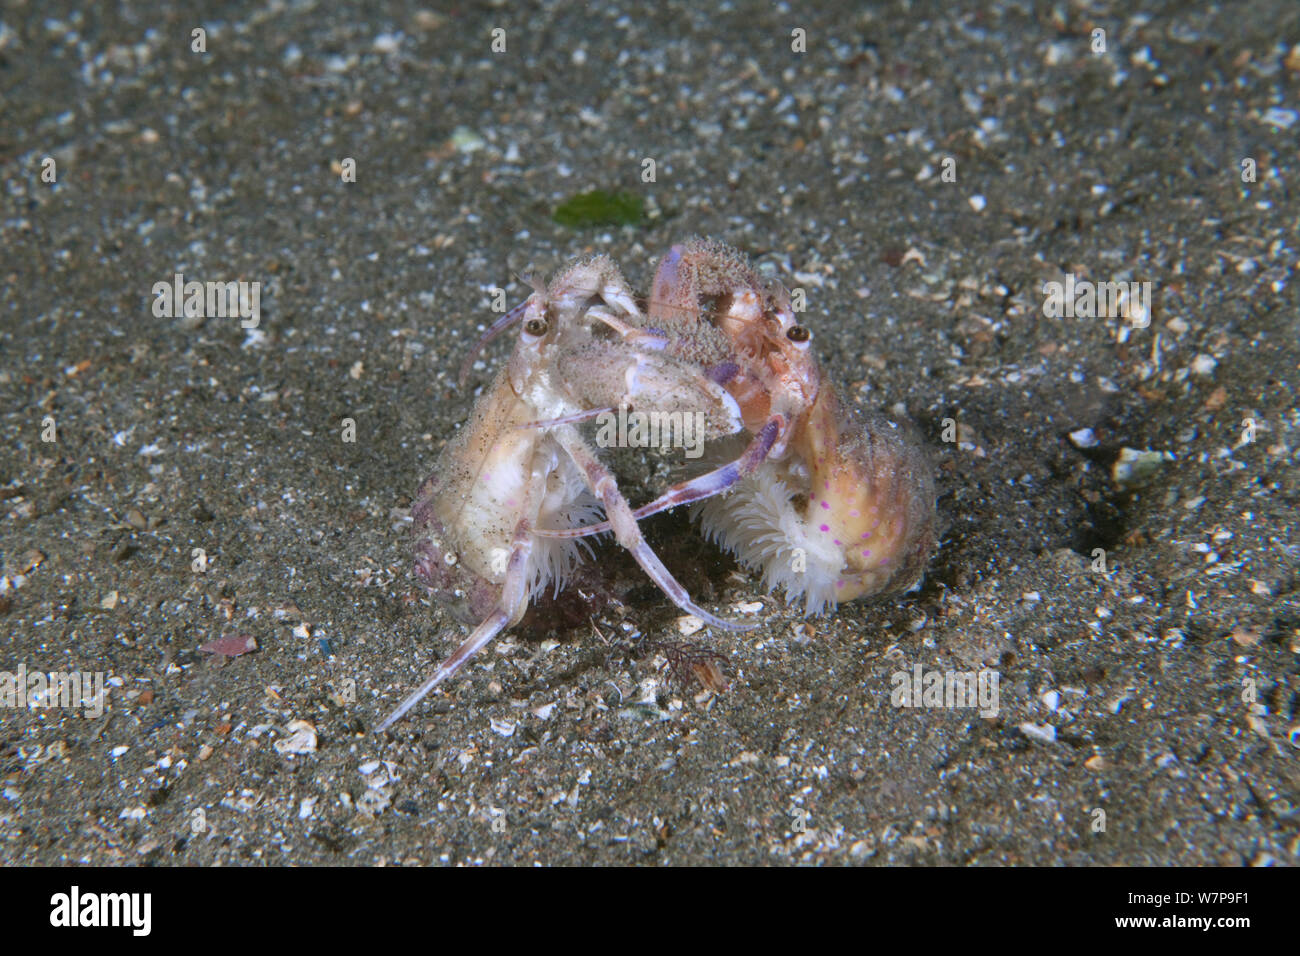 Anemone Hermit Crabs (Pagurus prideaux) engaging in courtship behaviour. Maseline Harbour, Sark, British Channel Islands, September. Stock Photo